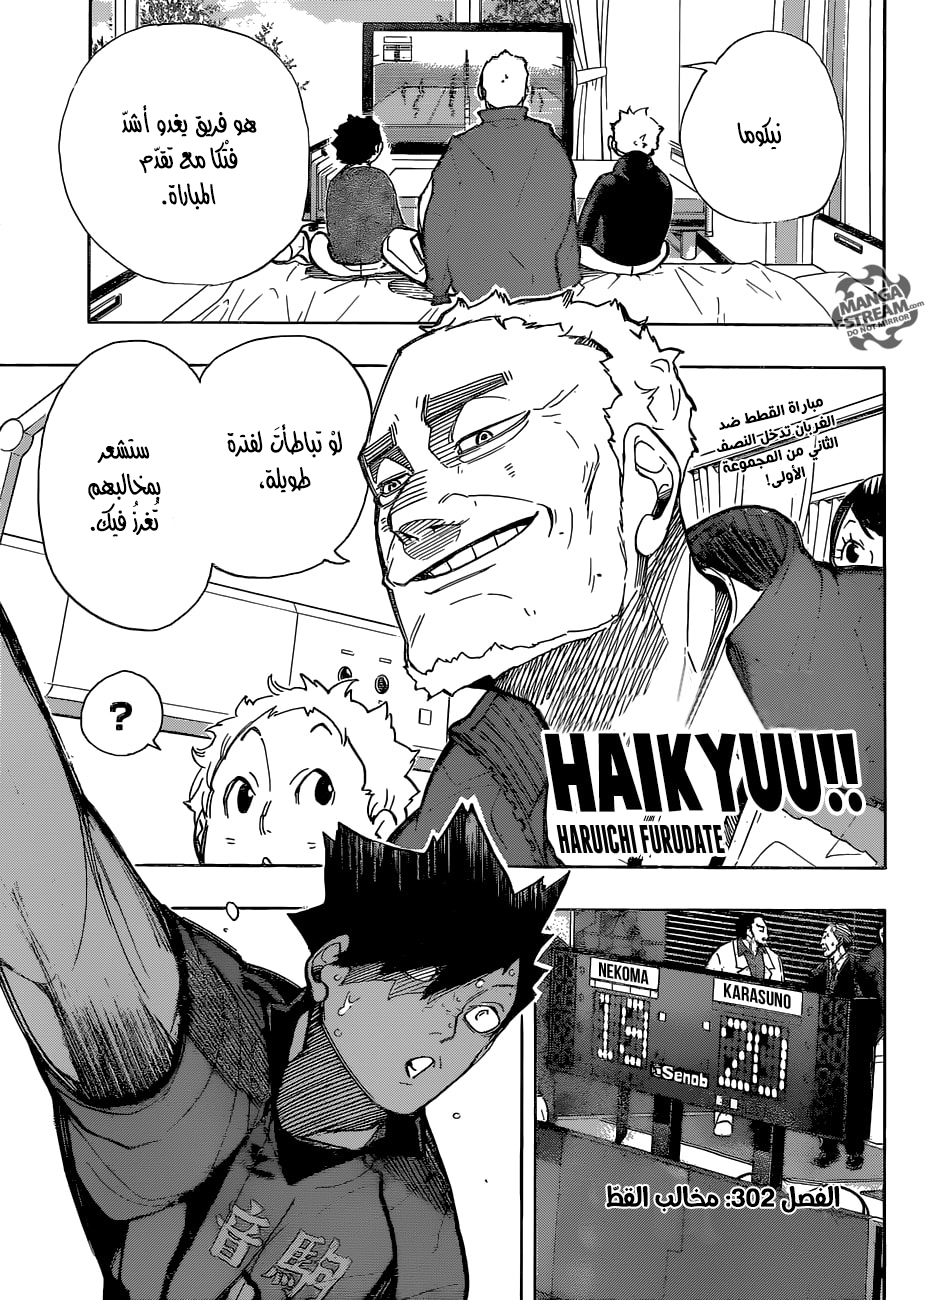 Haikyuu!!: Chapter 302 - Page 1